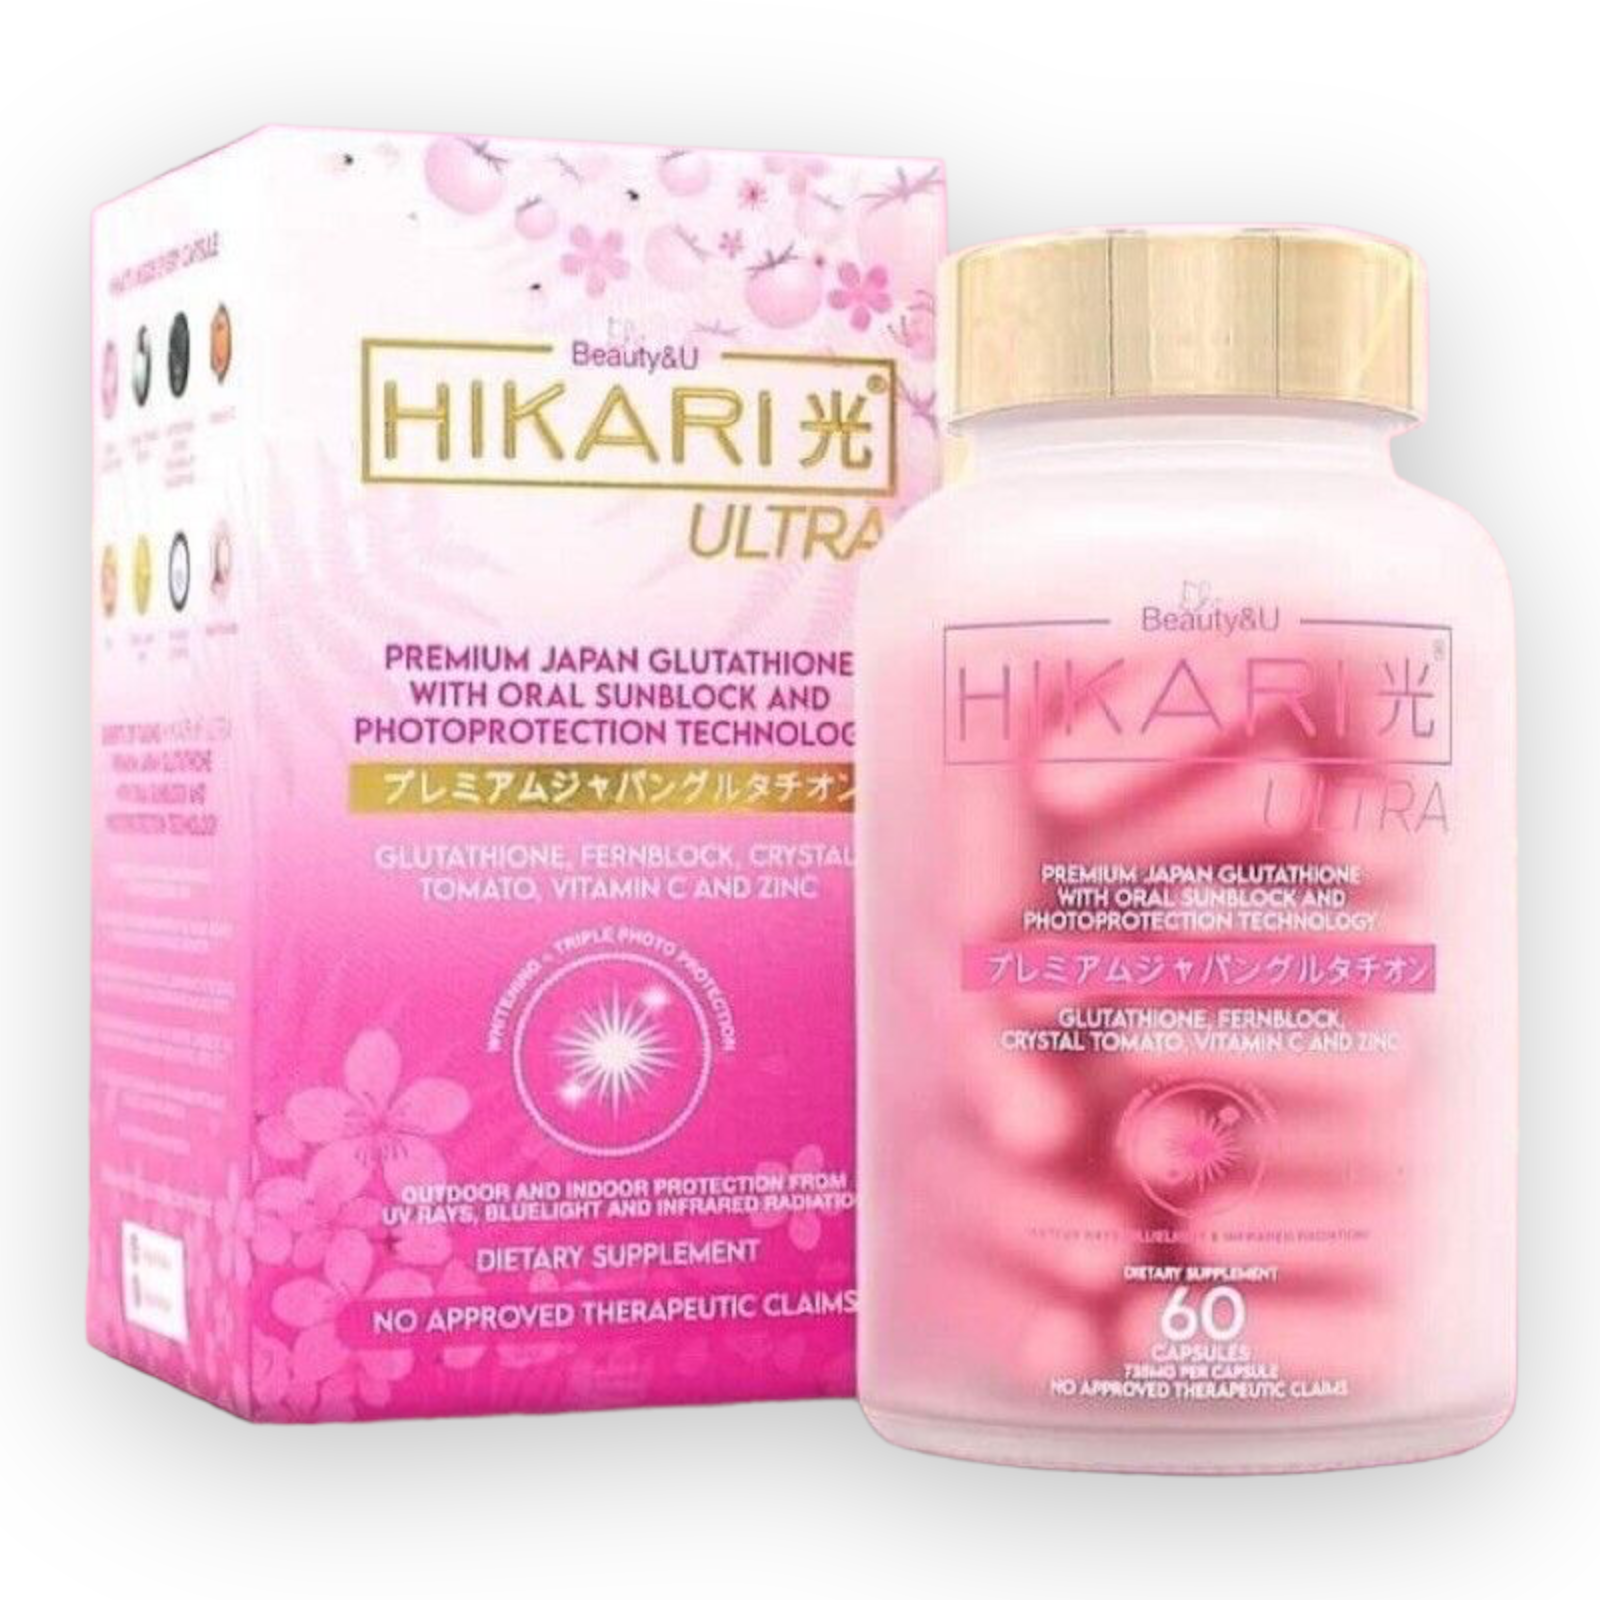 Hikari ULTRA Glutathione Capsule | Premium Japan Glutathione with Oral Sunblock Technology - 60 caps